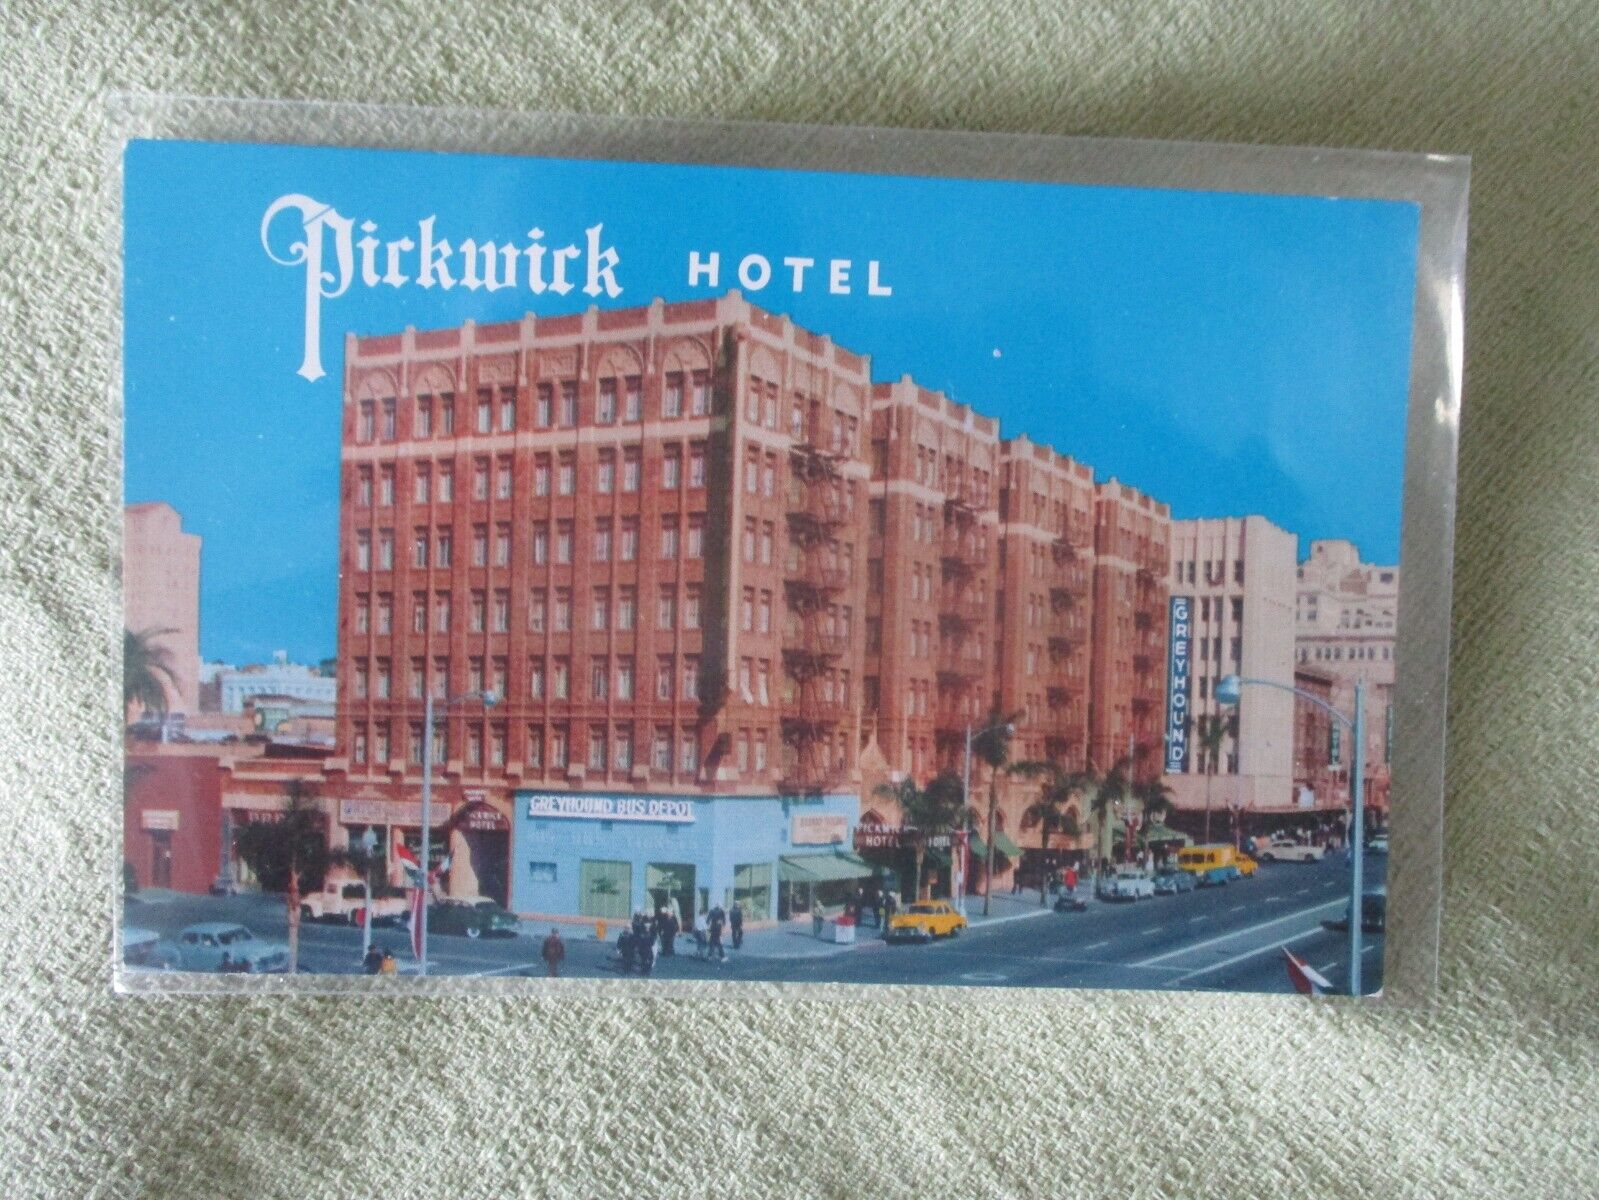 Pickwick Hotel San Diego, CA Postcard Unposted, Crisp Corners